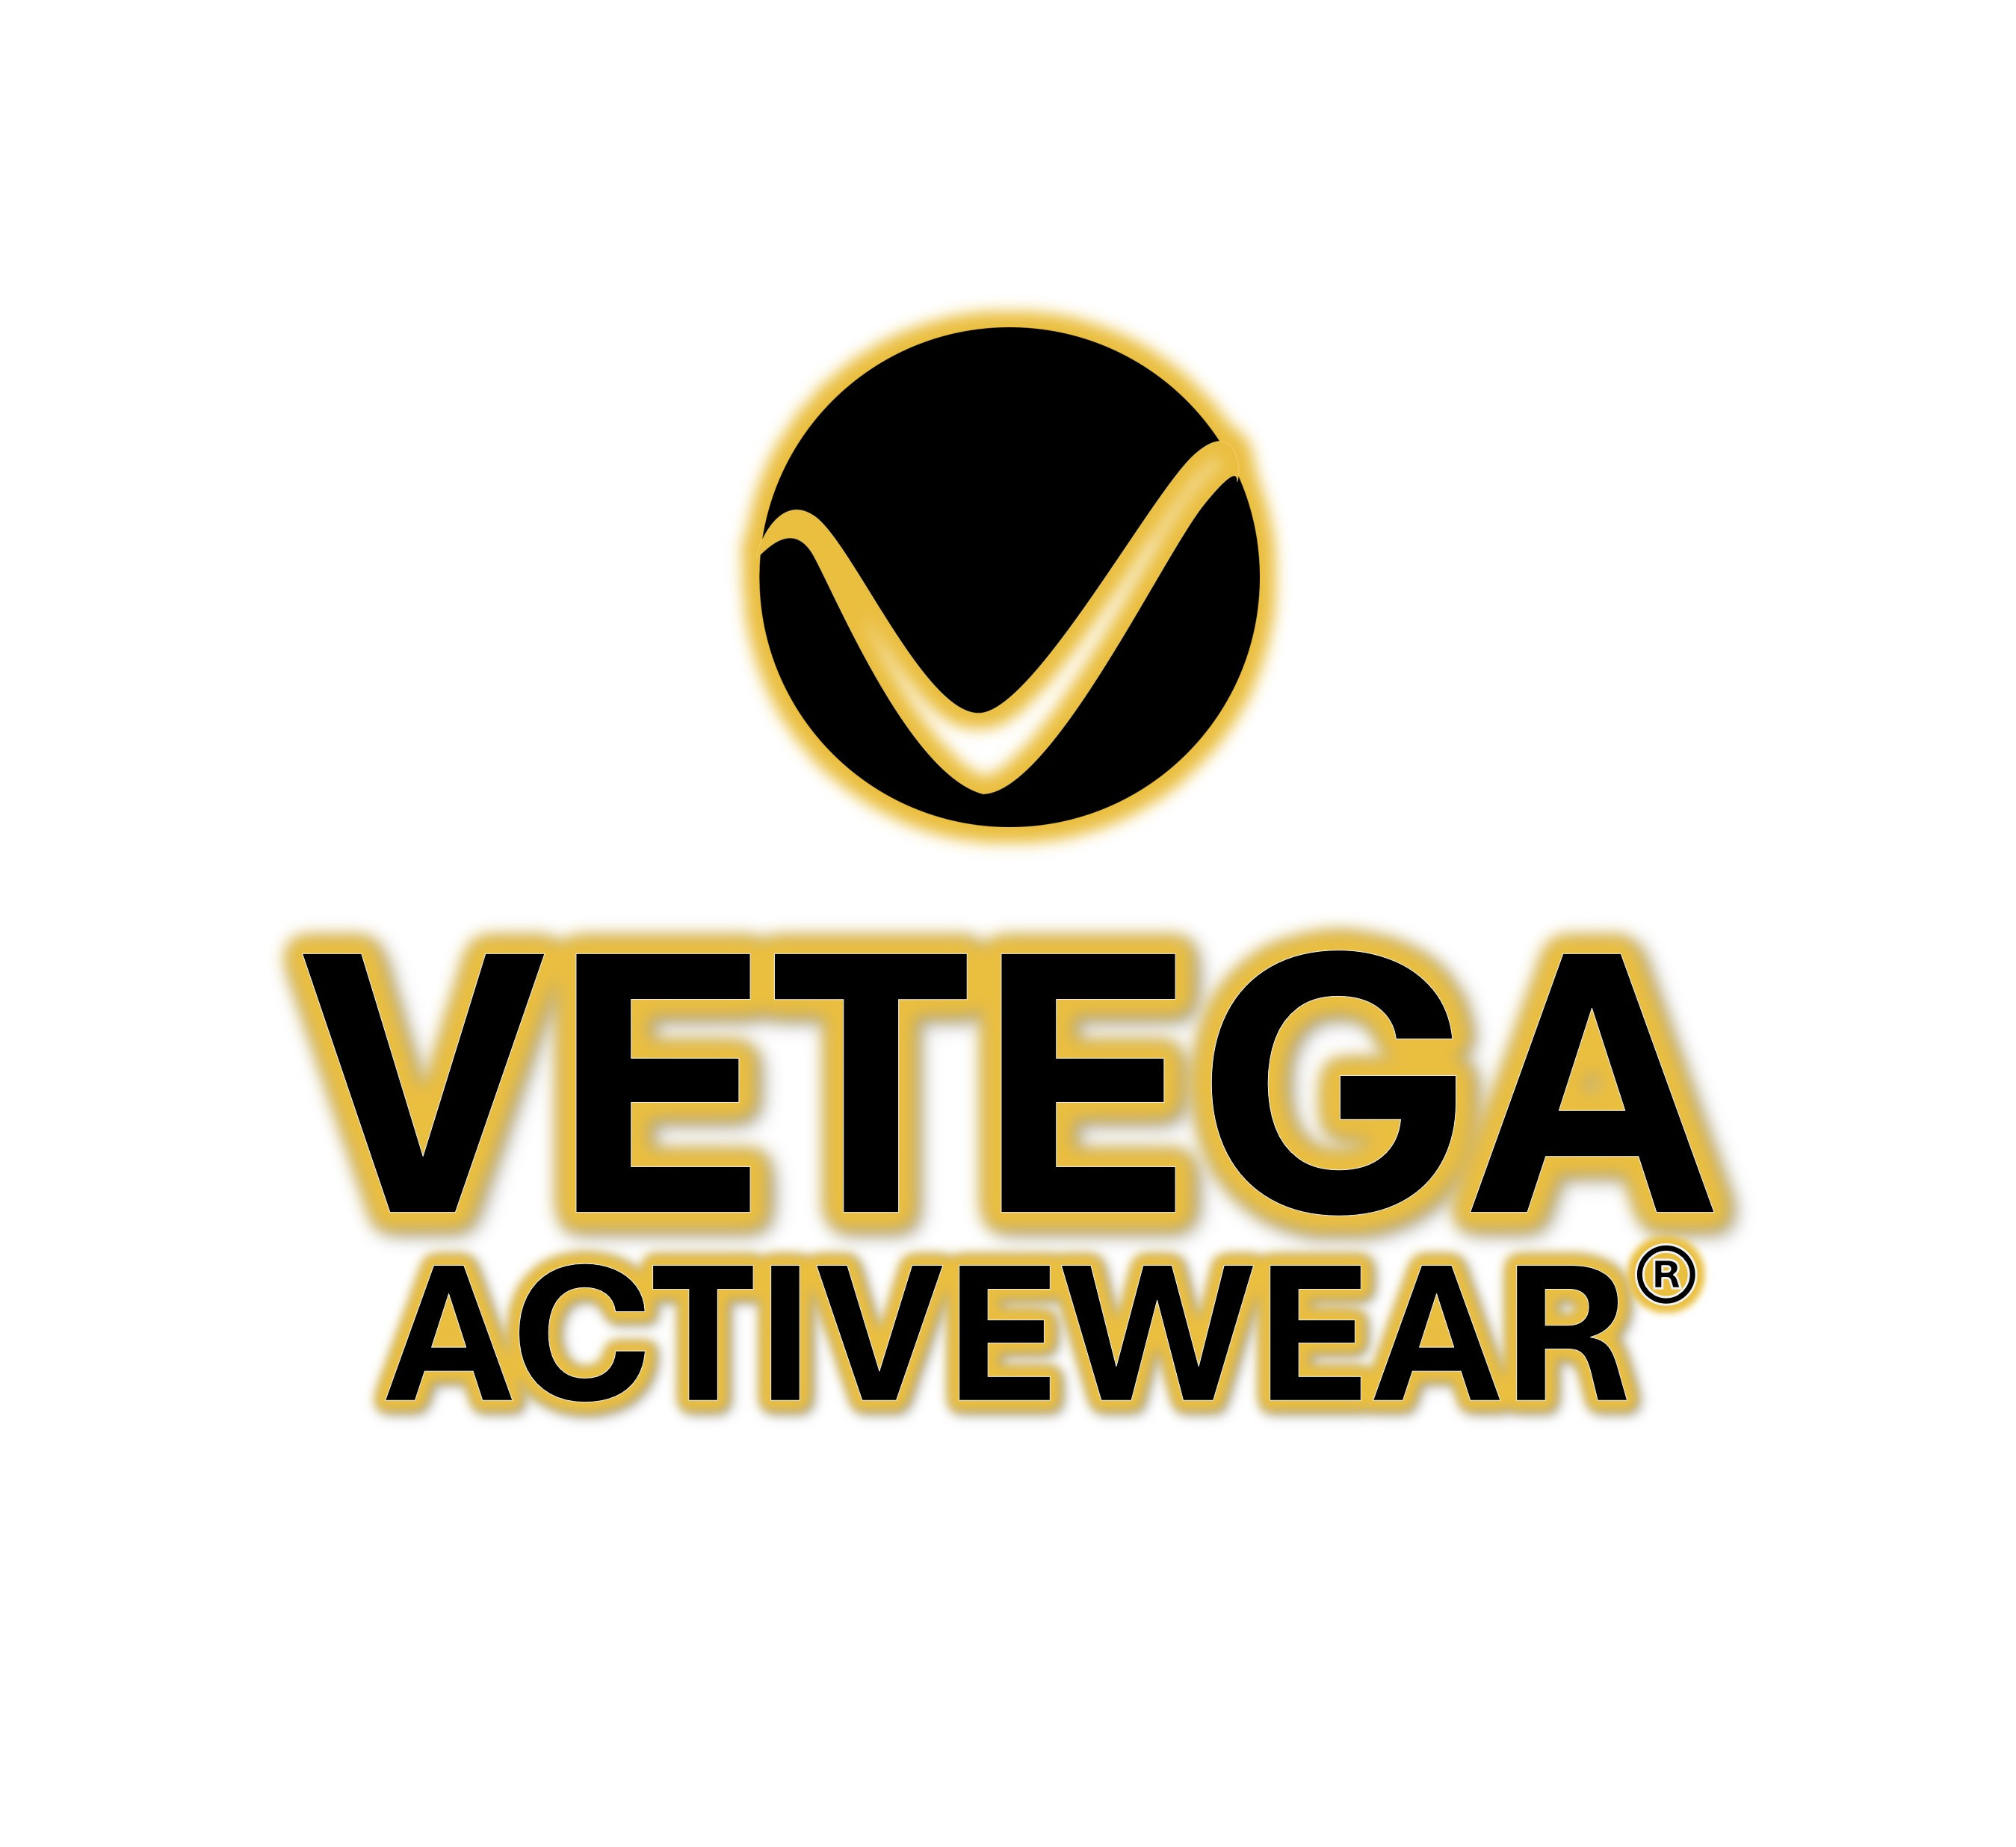 Vetega Activewear